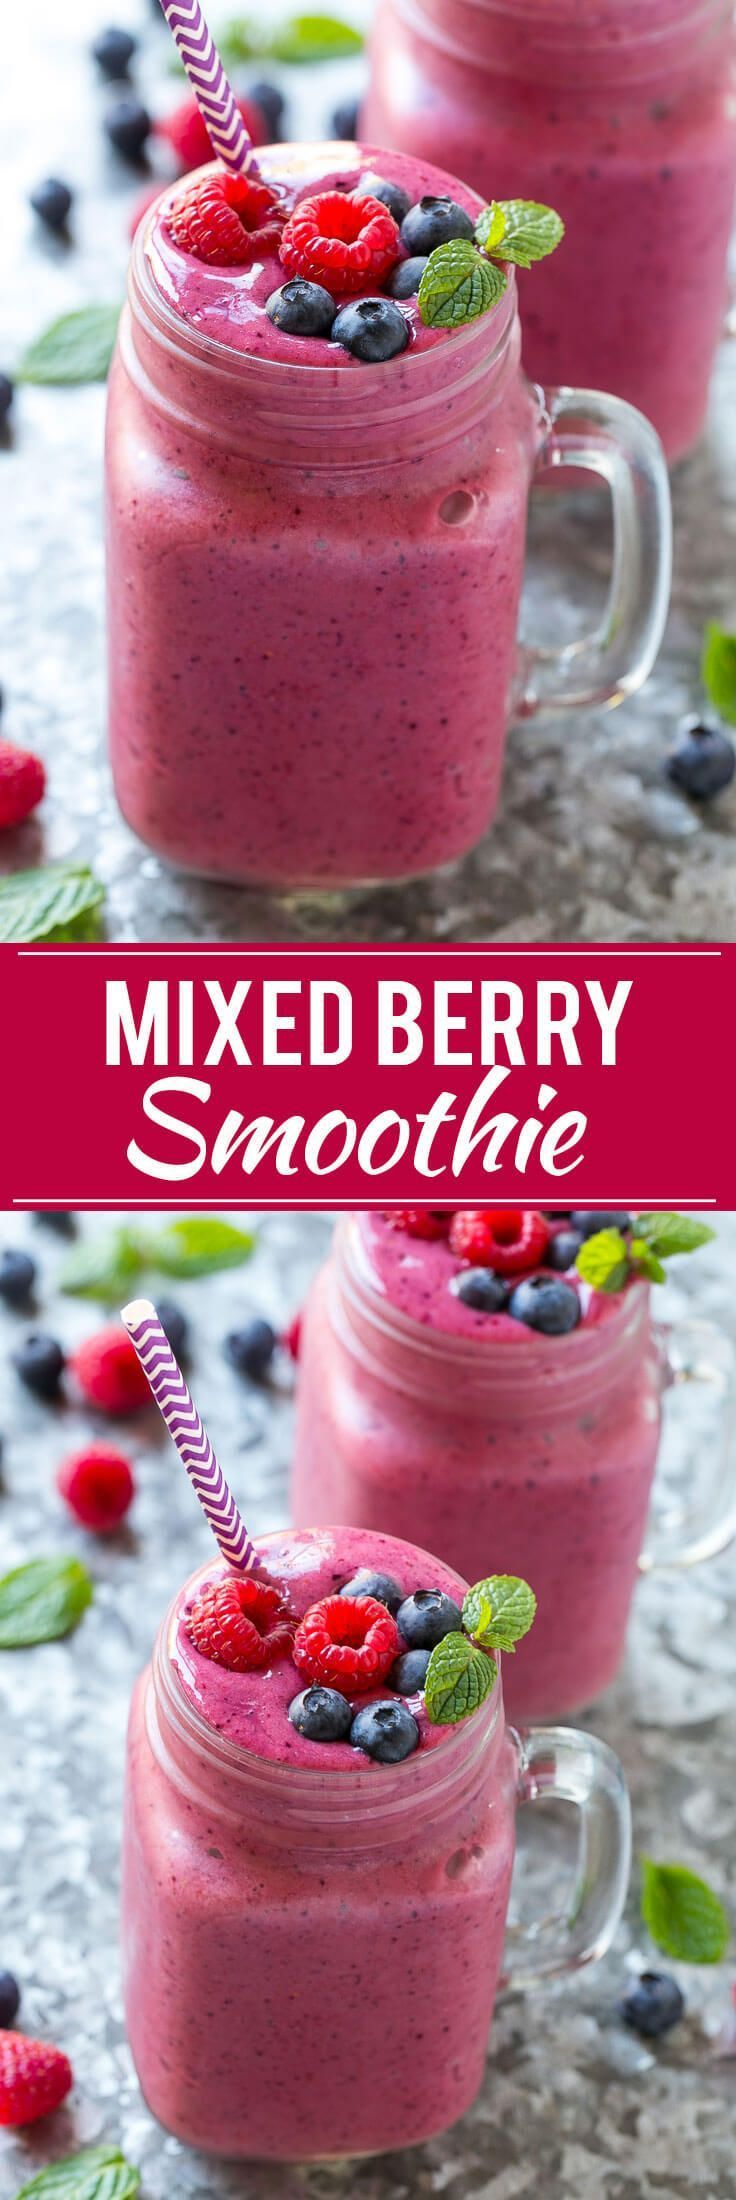 Mixed Berry Smoothie Recipe | Berry Smoothie | Healthy Smoothie Recipe | Easy Smoothie